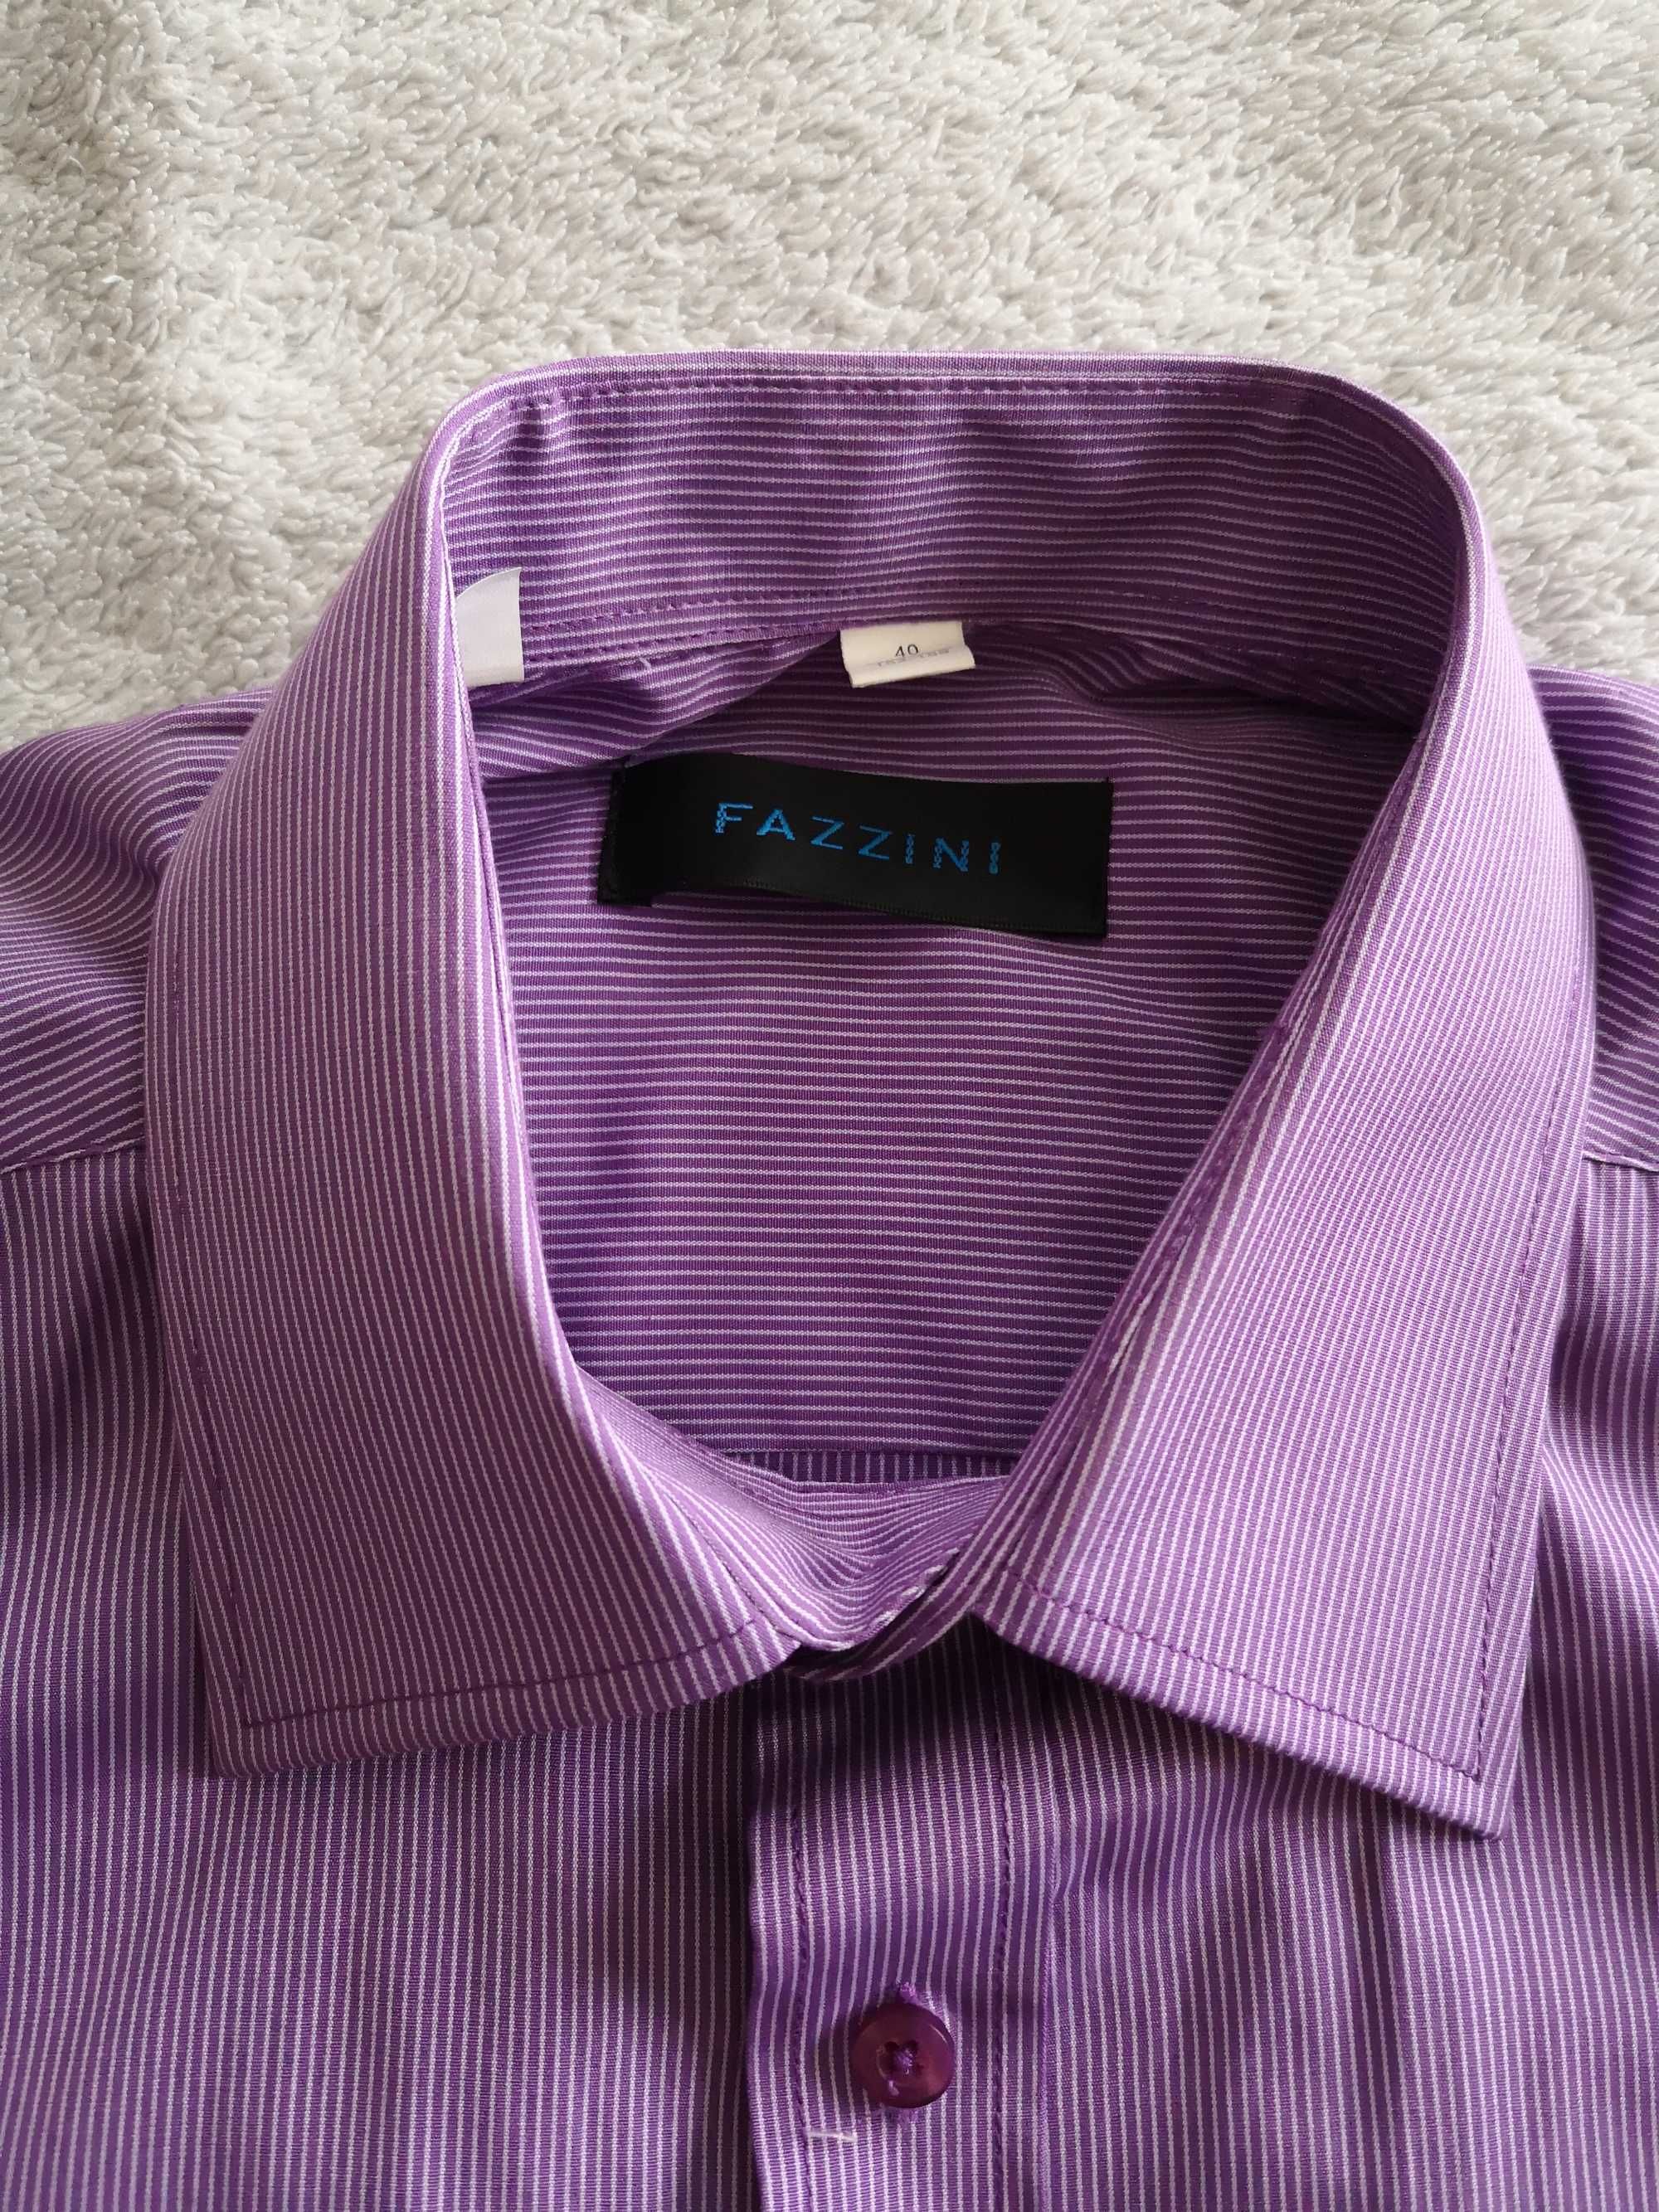 Elegancka fioletowa koszula w paski pasy Fazzini 40